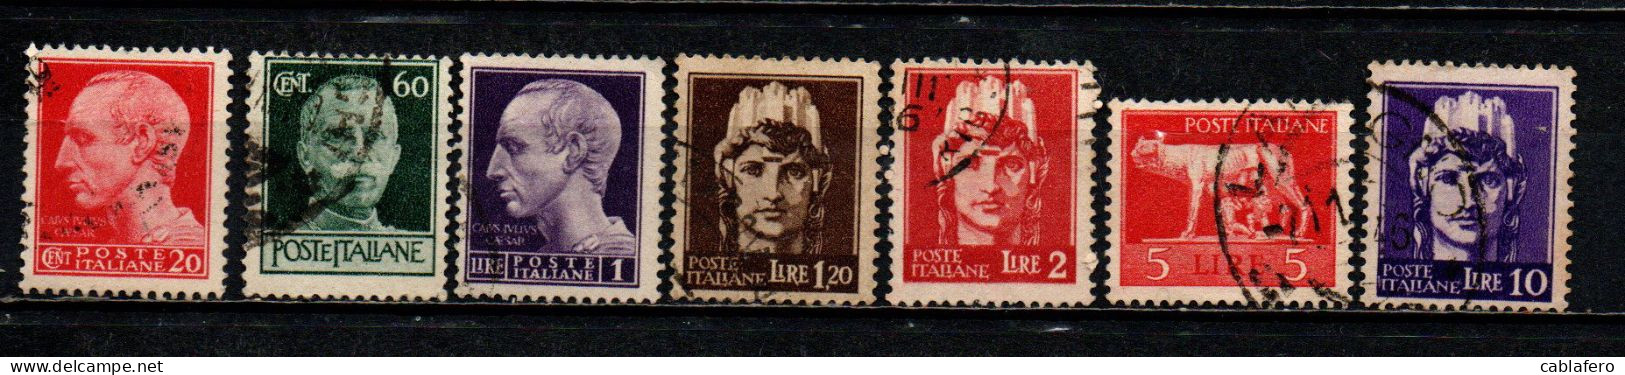 ITALIA LUOGOTENENZA - 1945 - SERIE IMPERIALE SENZA FASCIO - FIL. RUOTA - USATI - Used